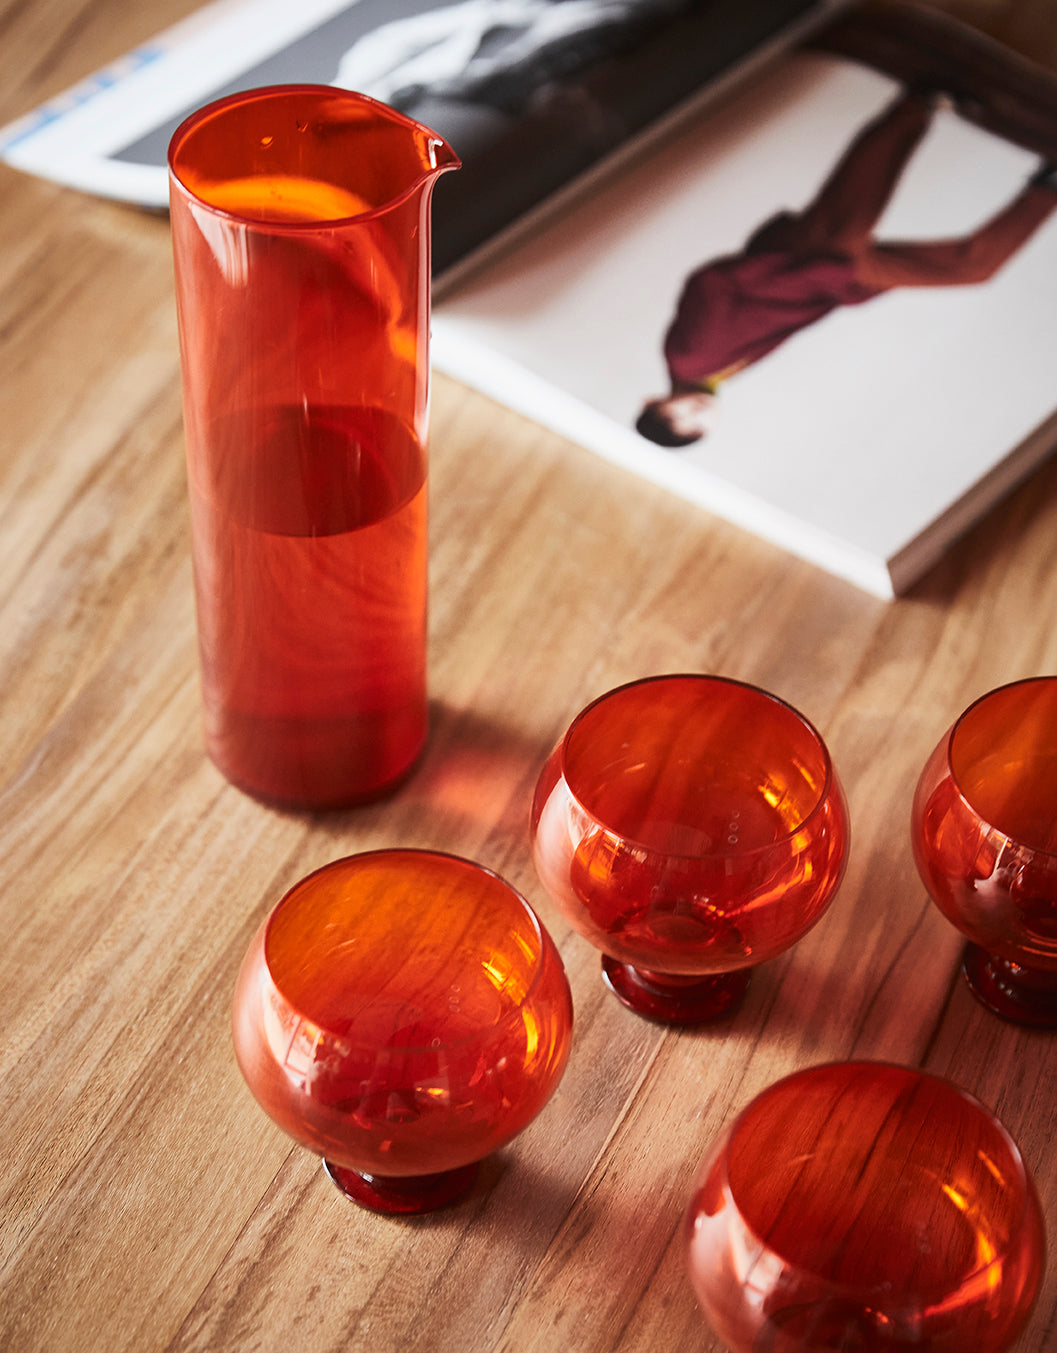 HKliving Funky Orange Glassware Set